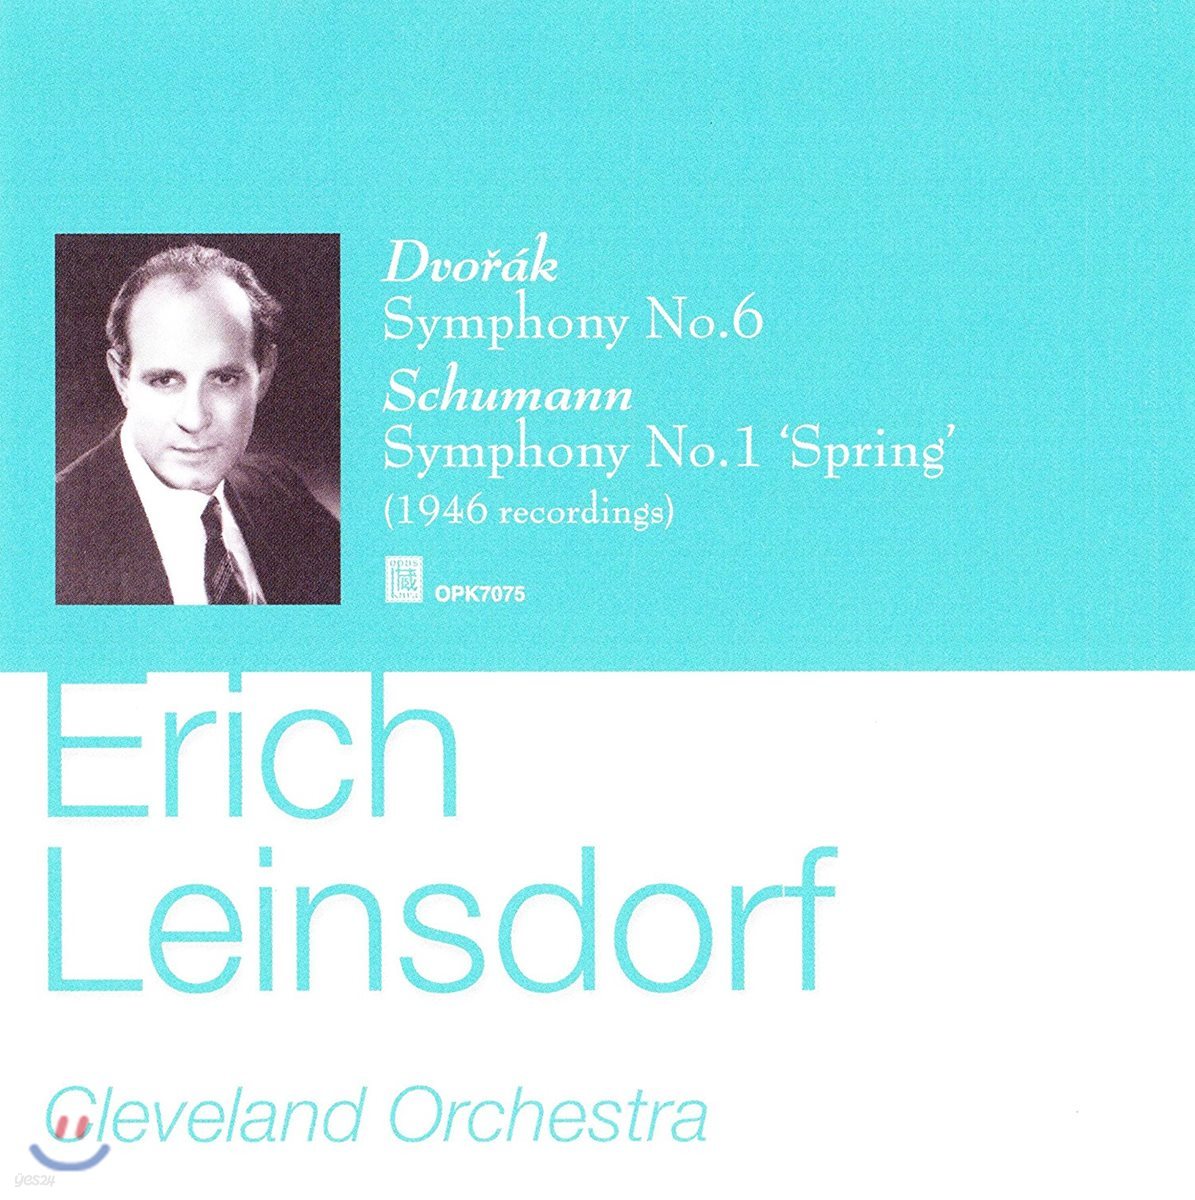 Erich Leinsdorf 드보르작: 교향곡 6번 / 슈만: 교향곡 1번 &#39;봄&#39; (Dvorak / Schumann; Symphonies Op.60 &amp; Op.38 &#39;Spring&#39;)